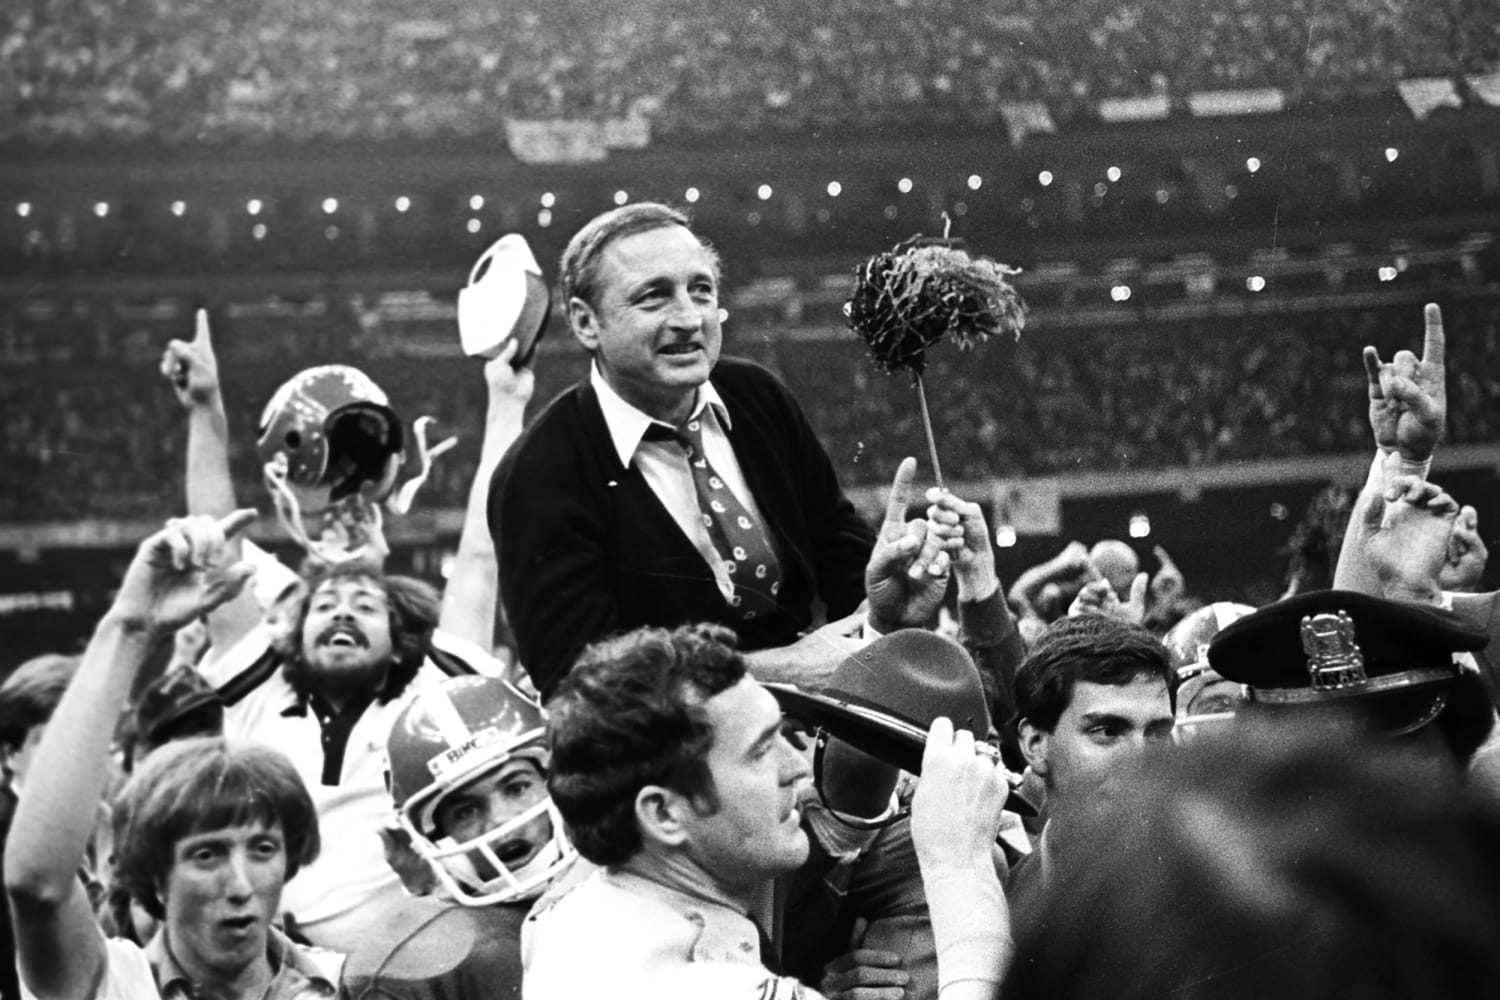 Vince Dooley, longtime Georgia football coach, dies at 90